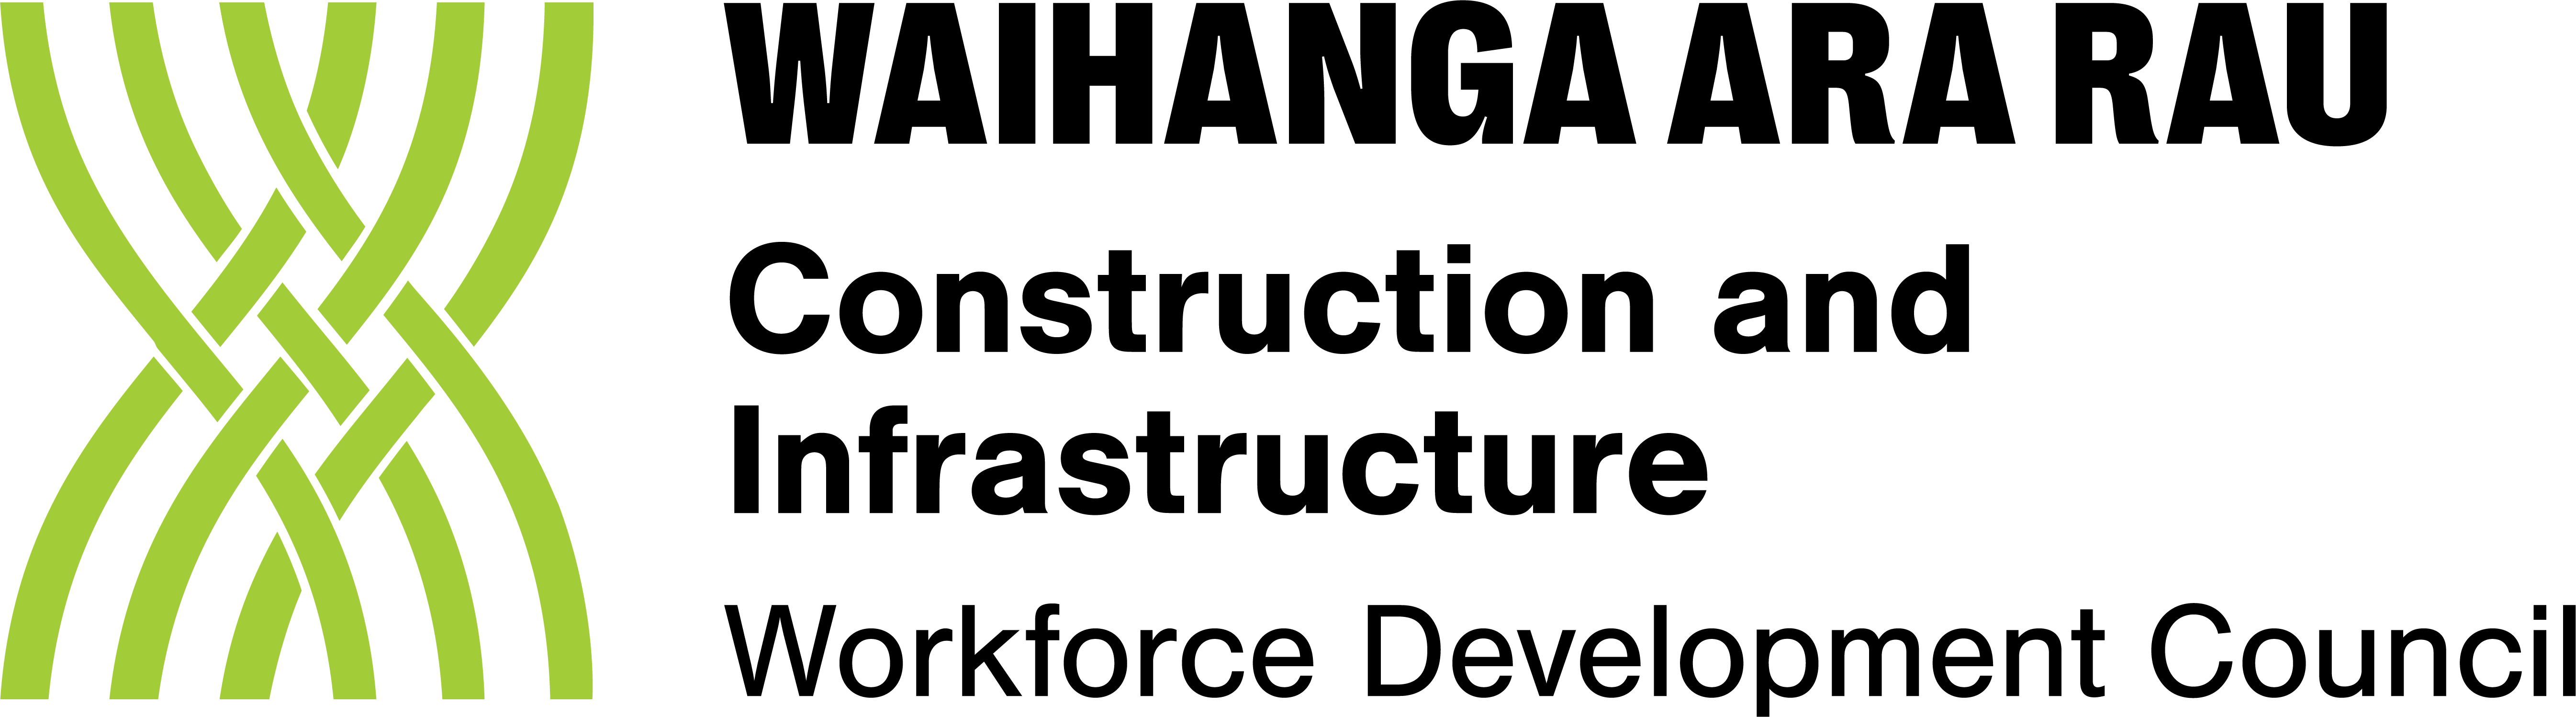 Waihanga Ara Rau Construction and Infrastruture WDC